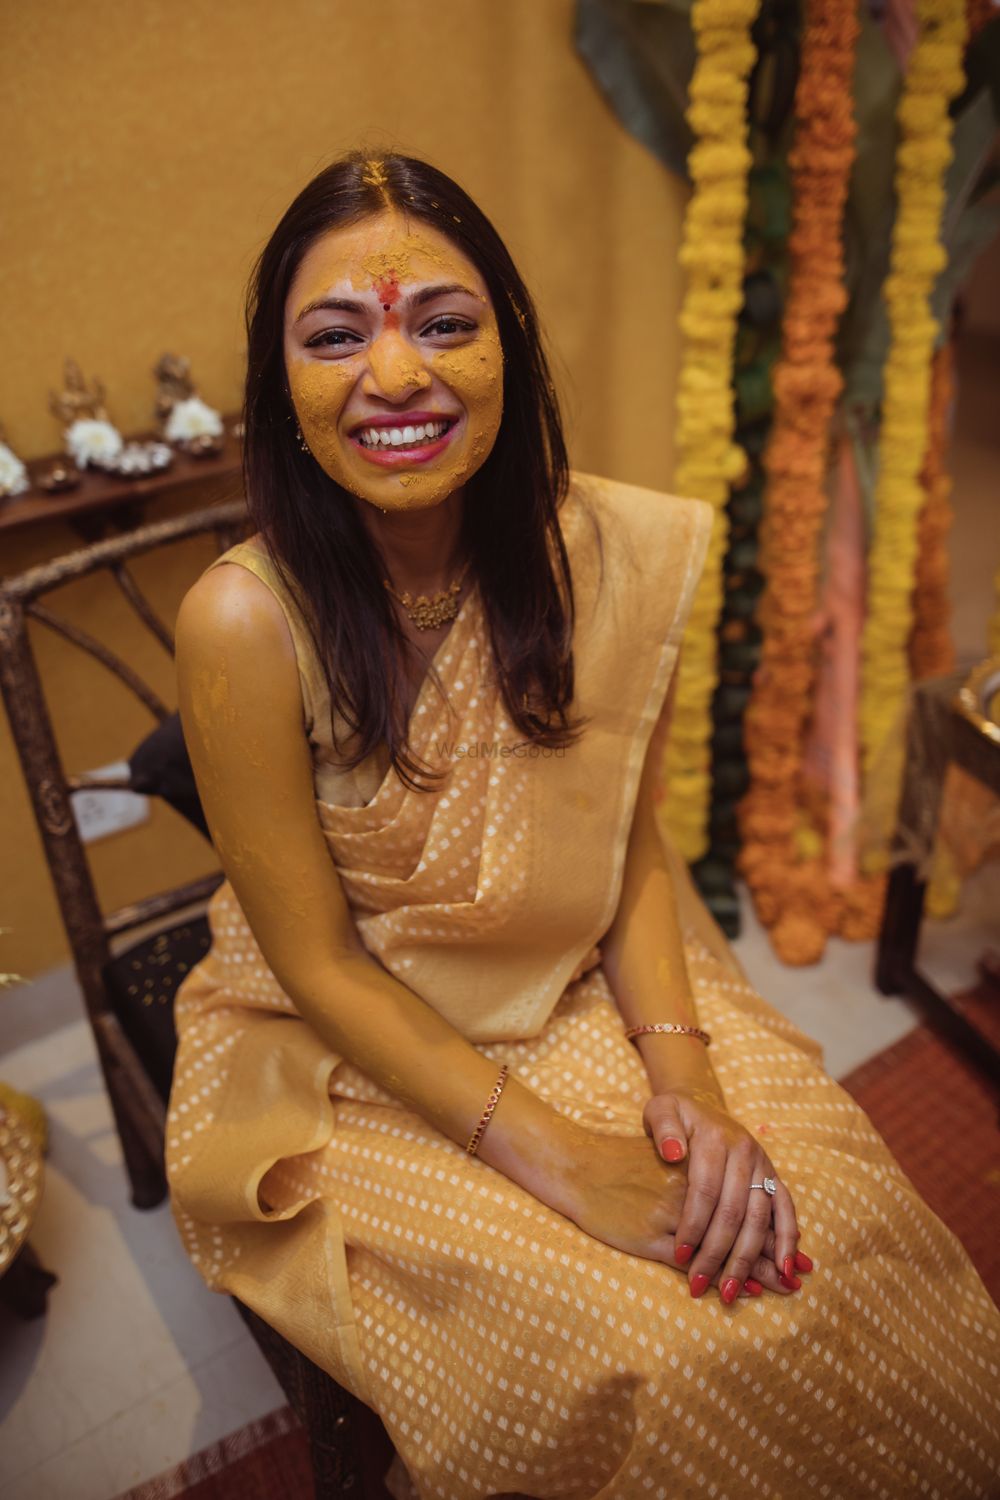 Photo of Bride wearing a yellow saree on her Haldi ceremony.